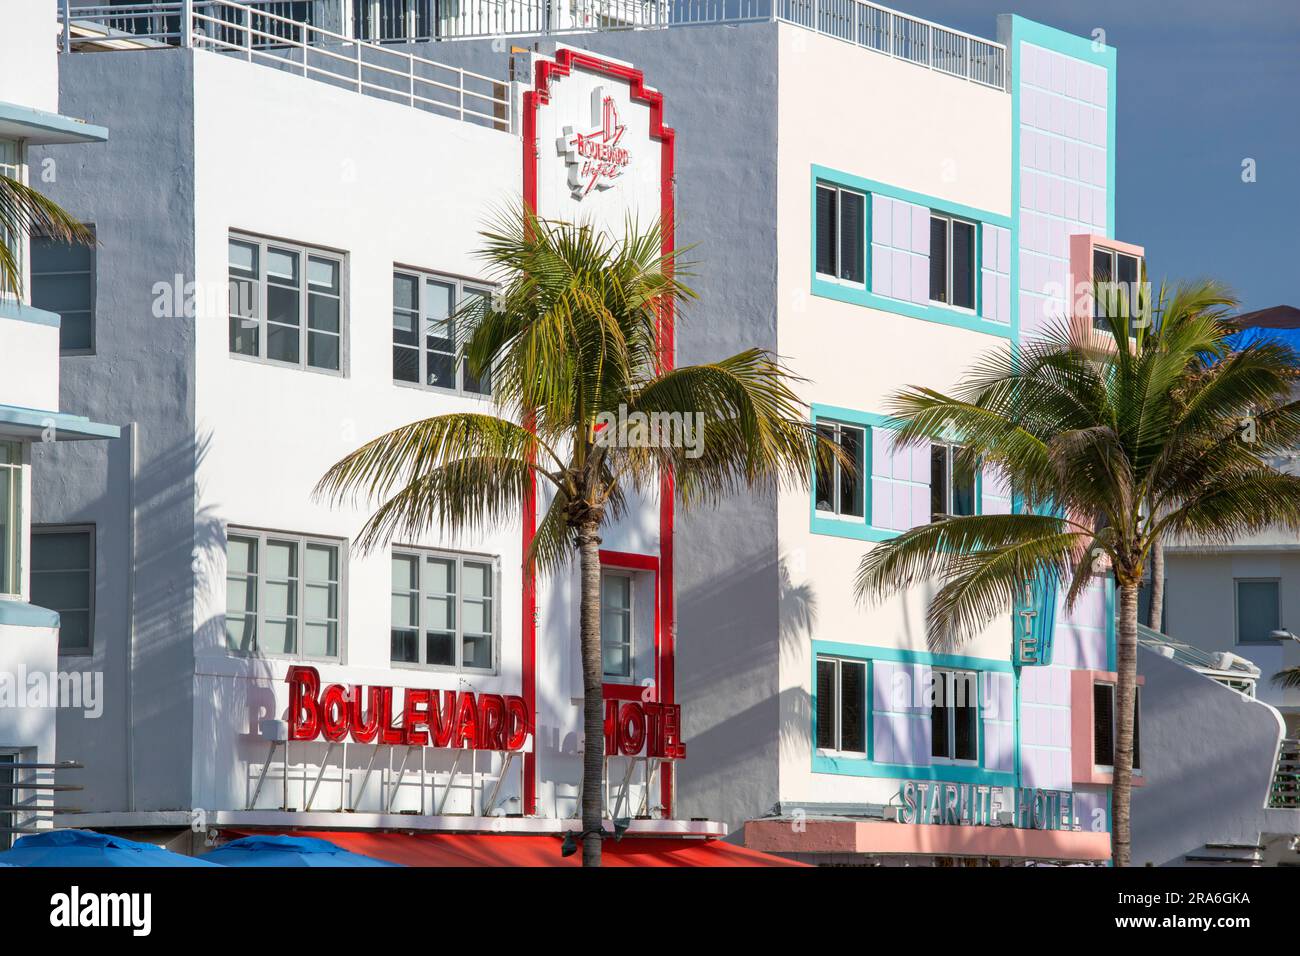 Miami Beach, Florida, USA. Colourful facades of the Boulevard and Starlite Hotels, Ocean Drive, Miami Beach Architectural District, South Beach. Stock Photo